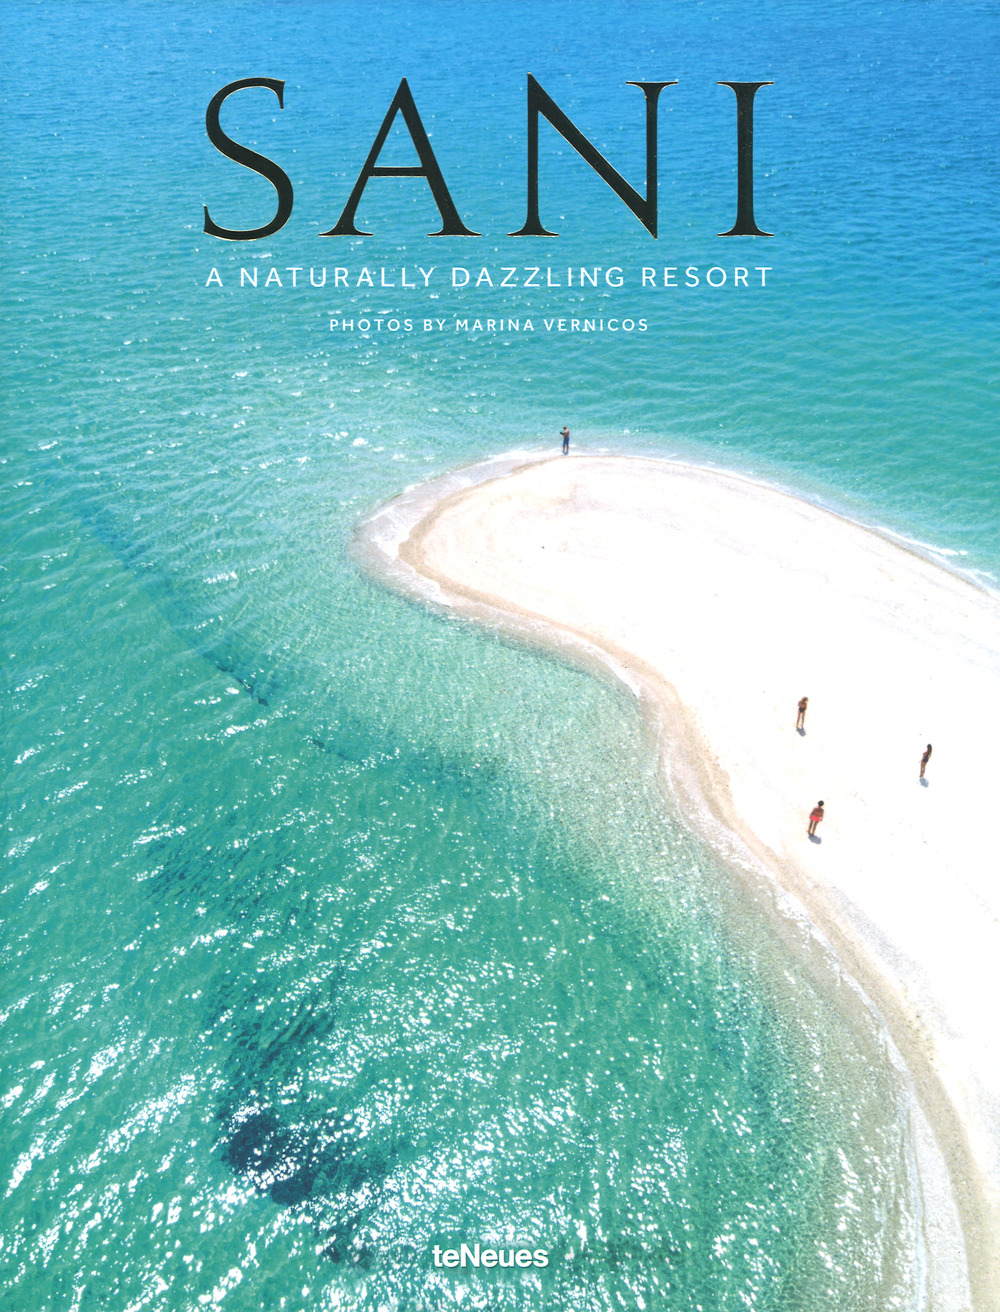 Sani. A naturally dazzling resort